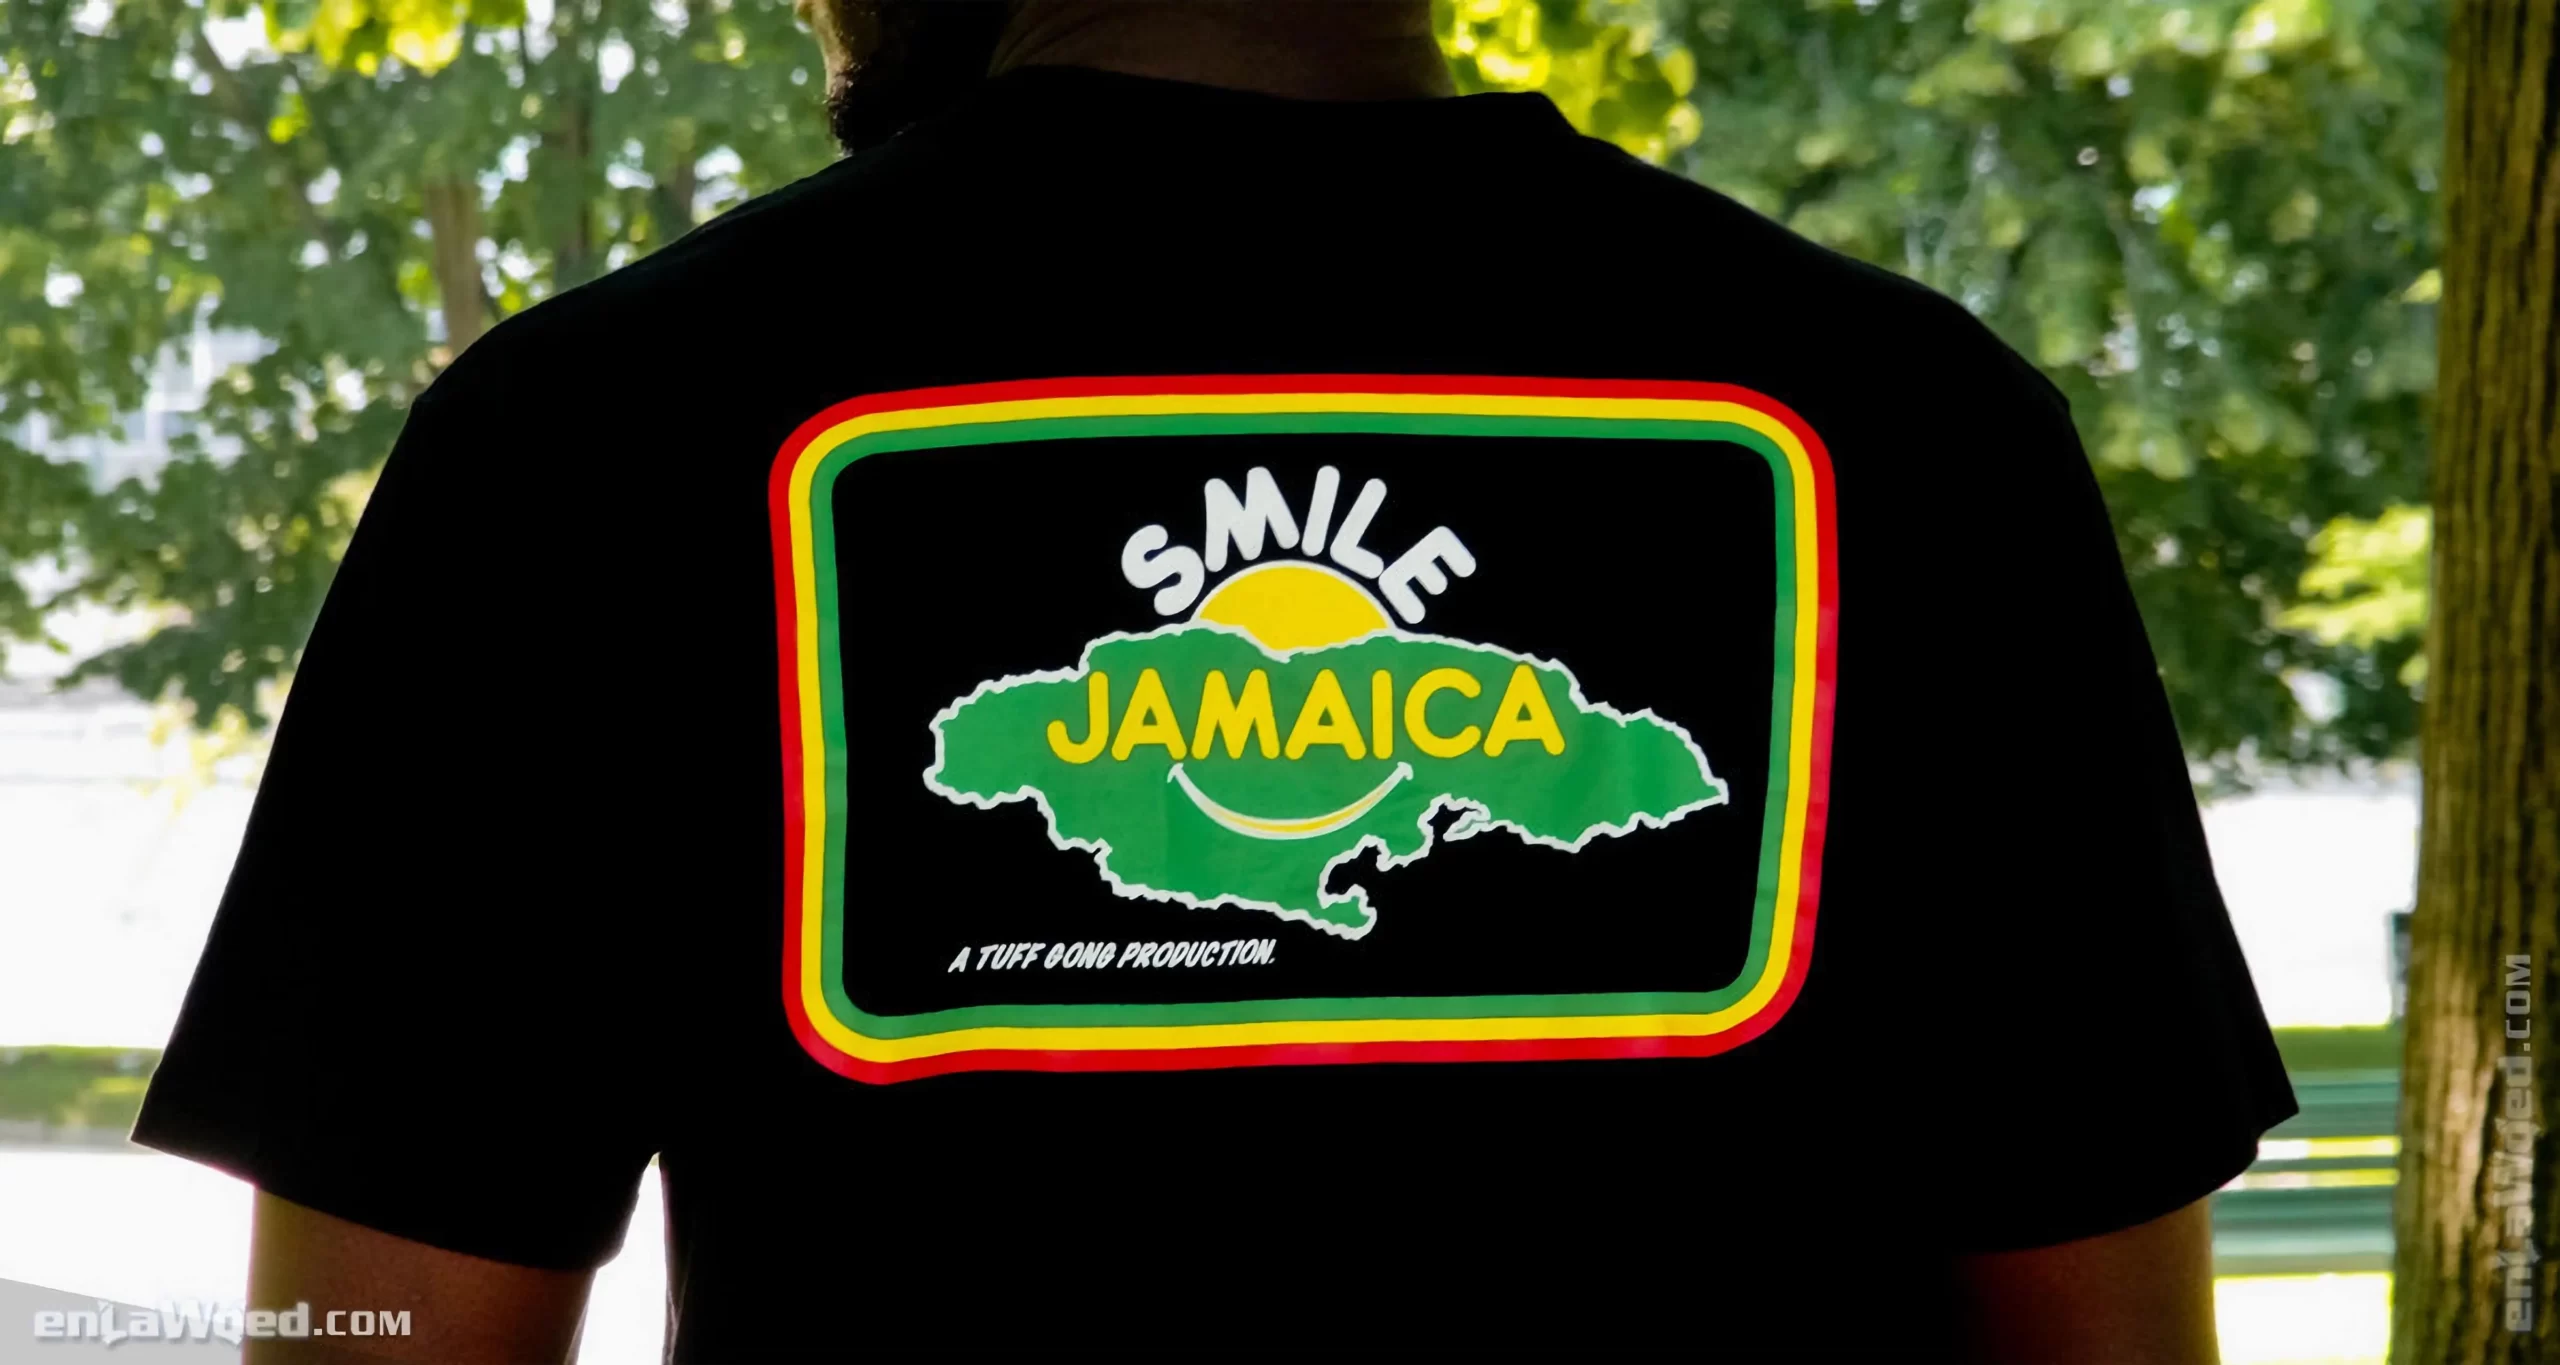 Men’s 2007 Bob Marley SMILE Tuff Gong T-Shirt by Adidas: Fine (EnLawded.com file #lmch6fofx2drher5tp)